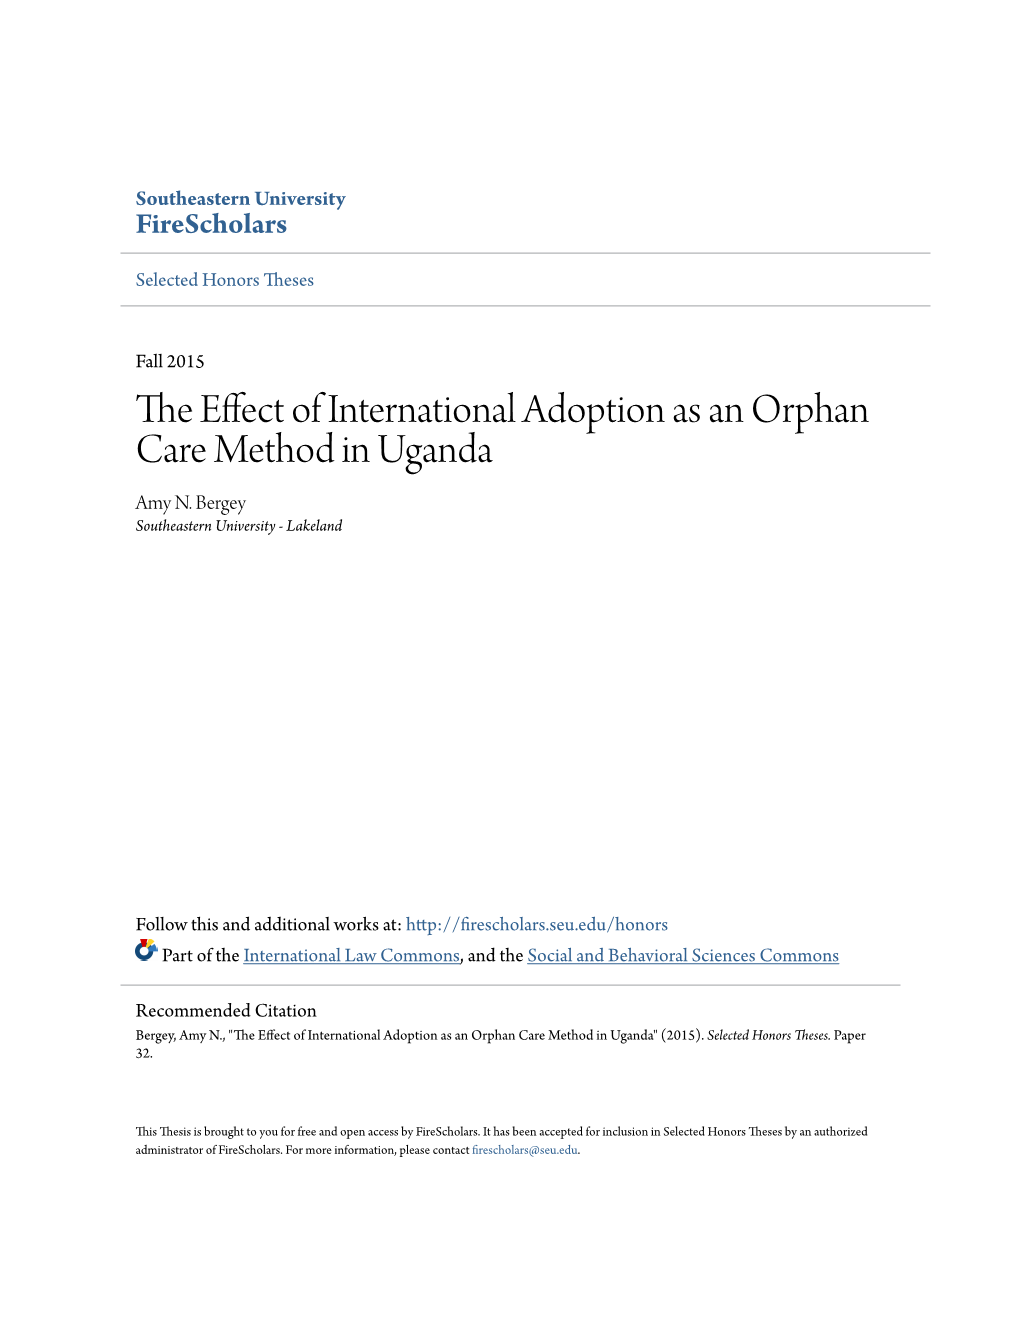 The Effect of International Adoption As an Orphan Care Method in Uganda" (2015)